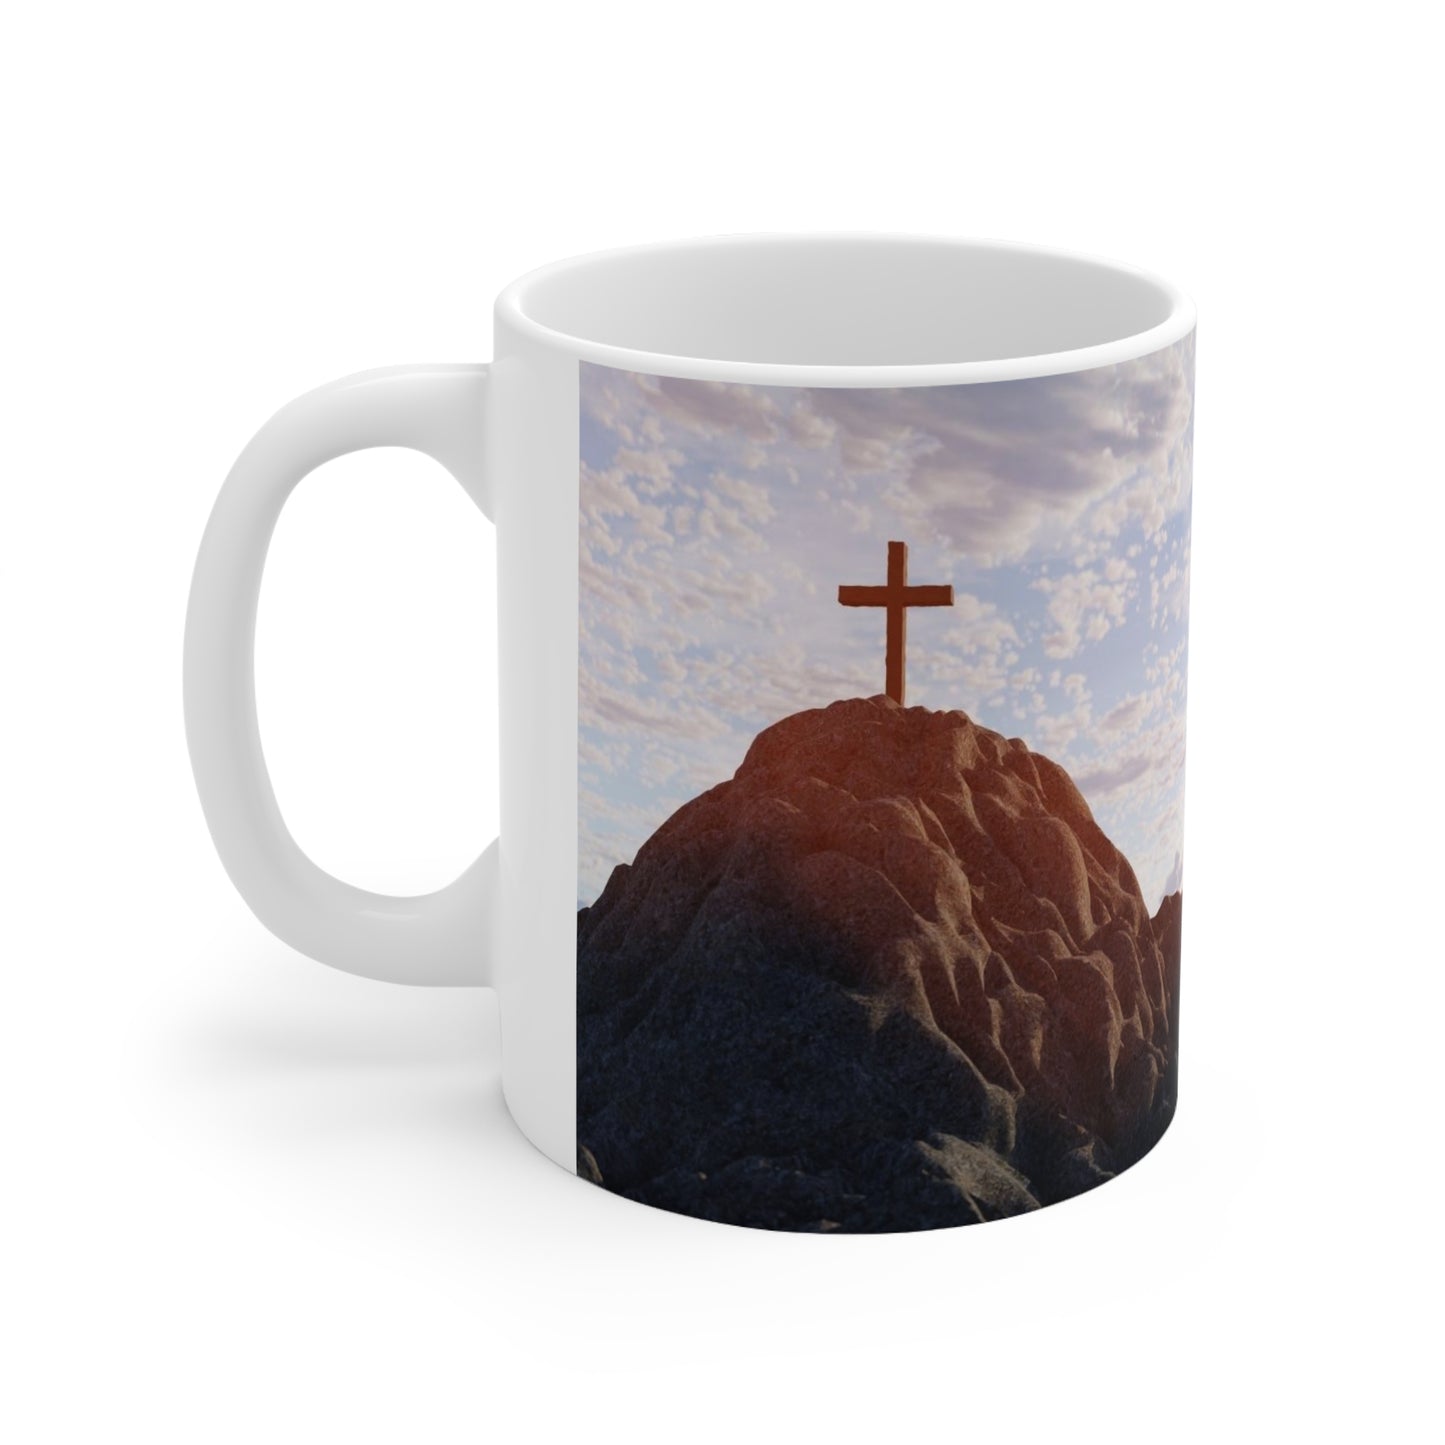 Jesus is Lord Ceramic Mug